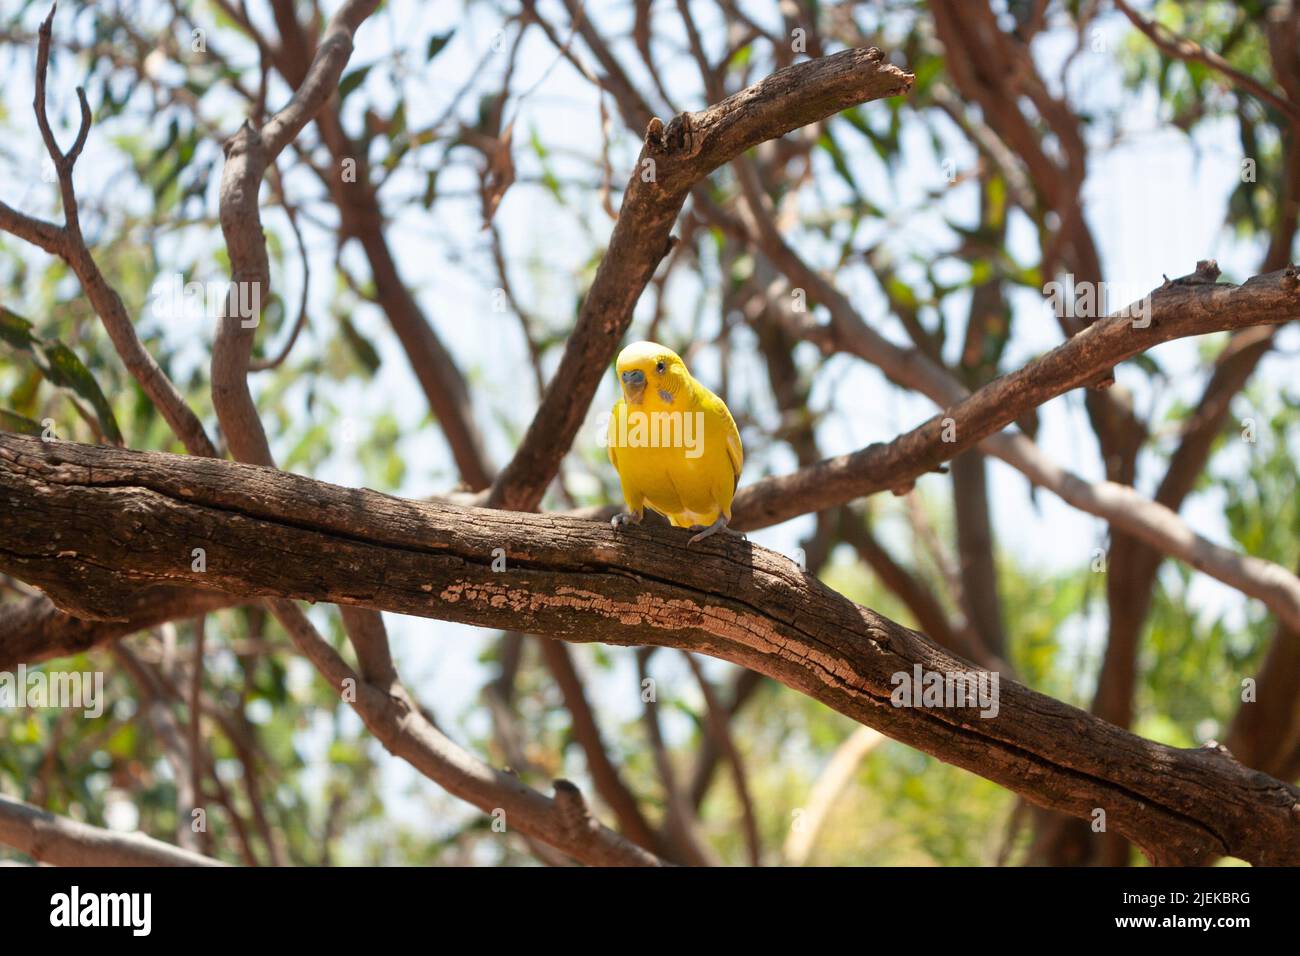 bird Australian Parakeet scientific name Melopsittacus undulatus on top of a branch looking at the camera yellow body Stock Photo